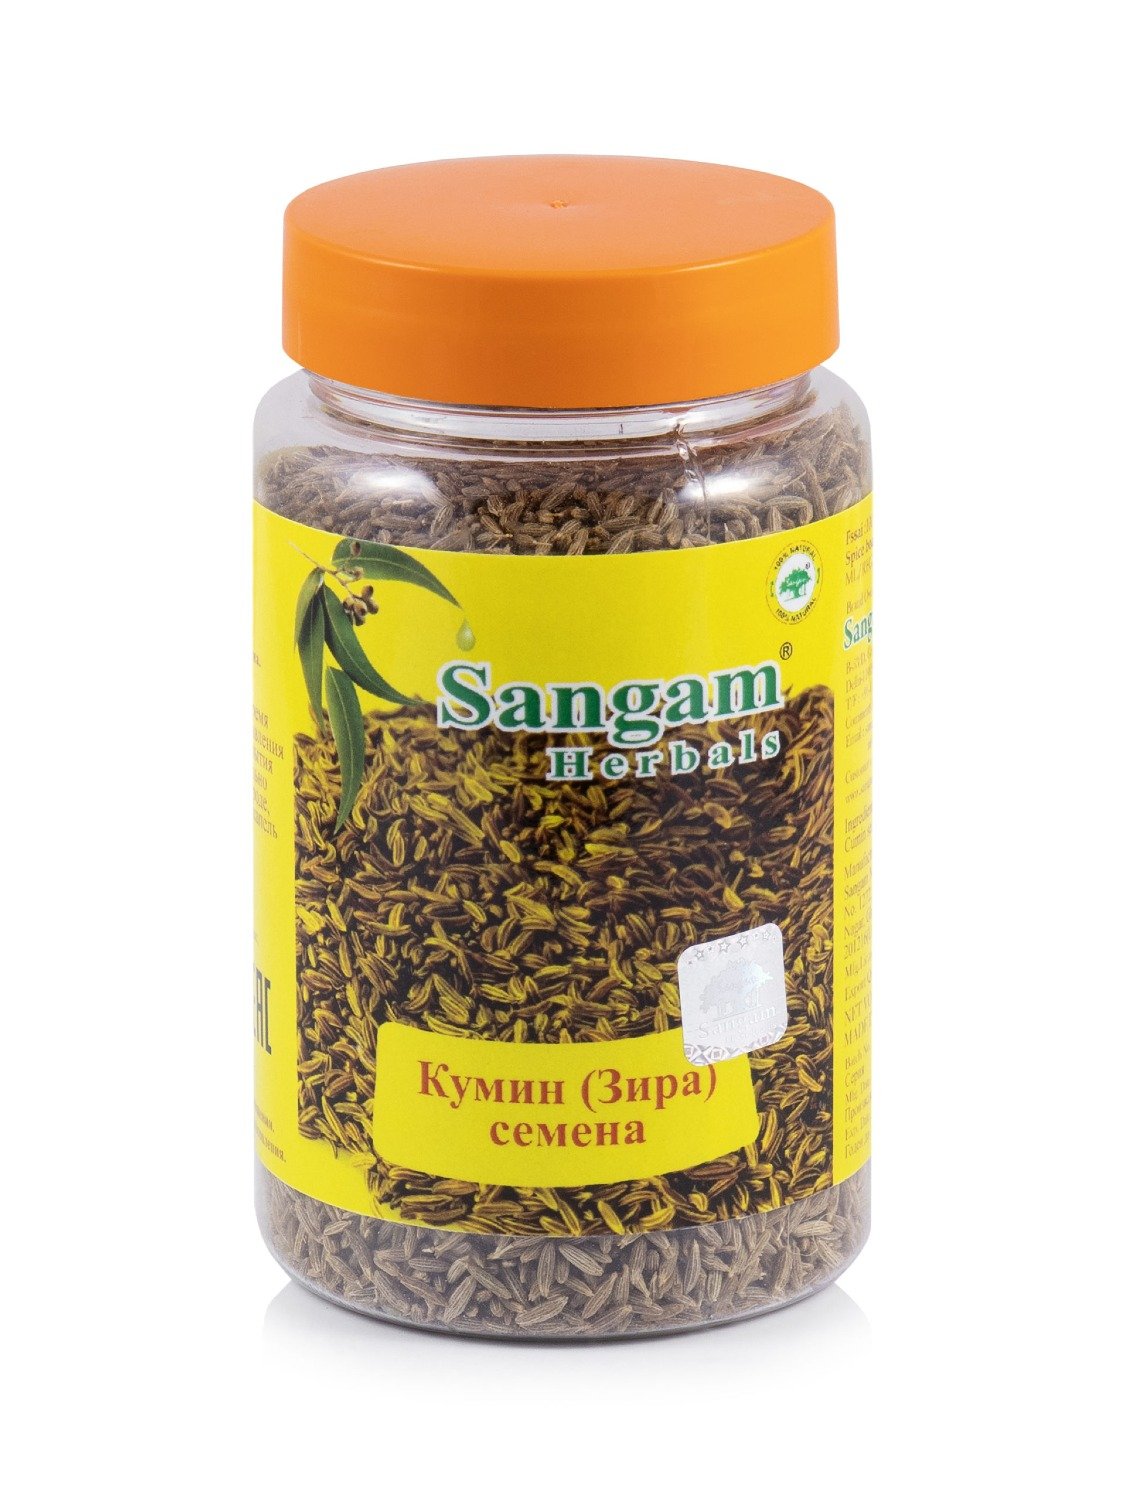 Кумин (Зира), семена Sangam Herbals (120 г). 